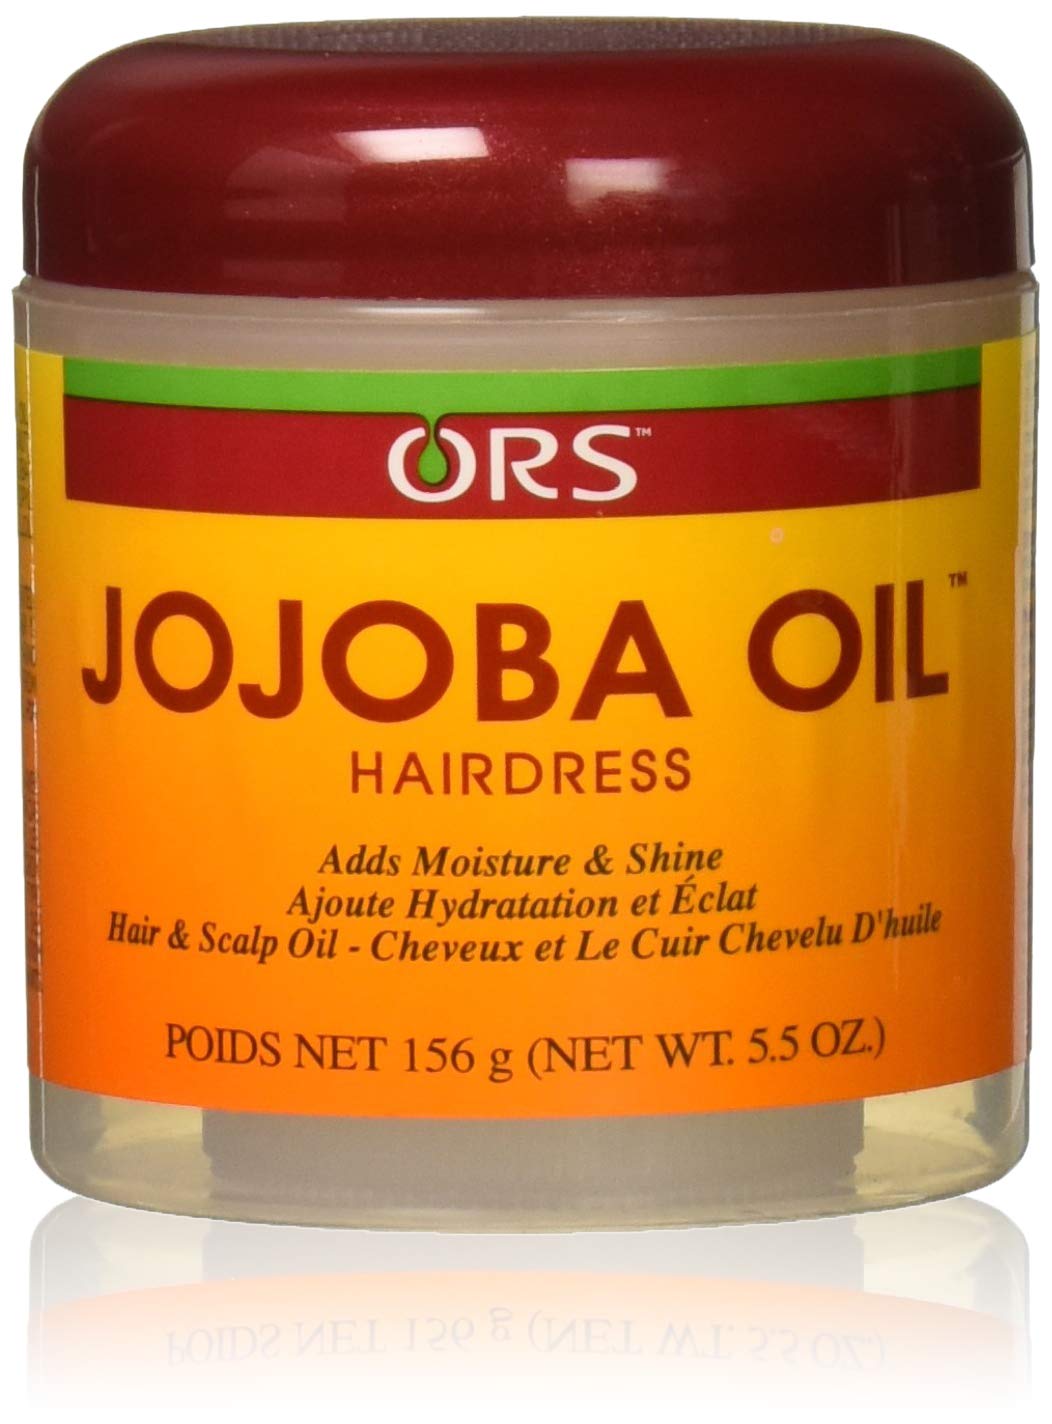 ORS Jojoba Oil Hairdress, 5.5oz